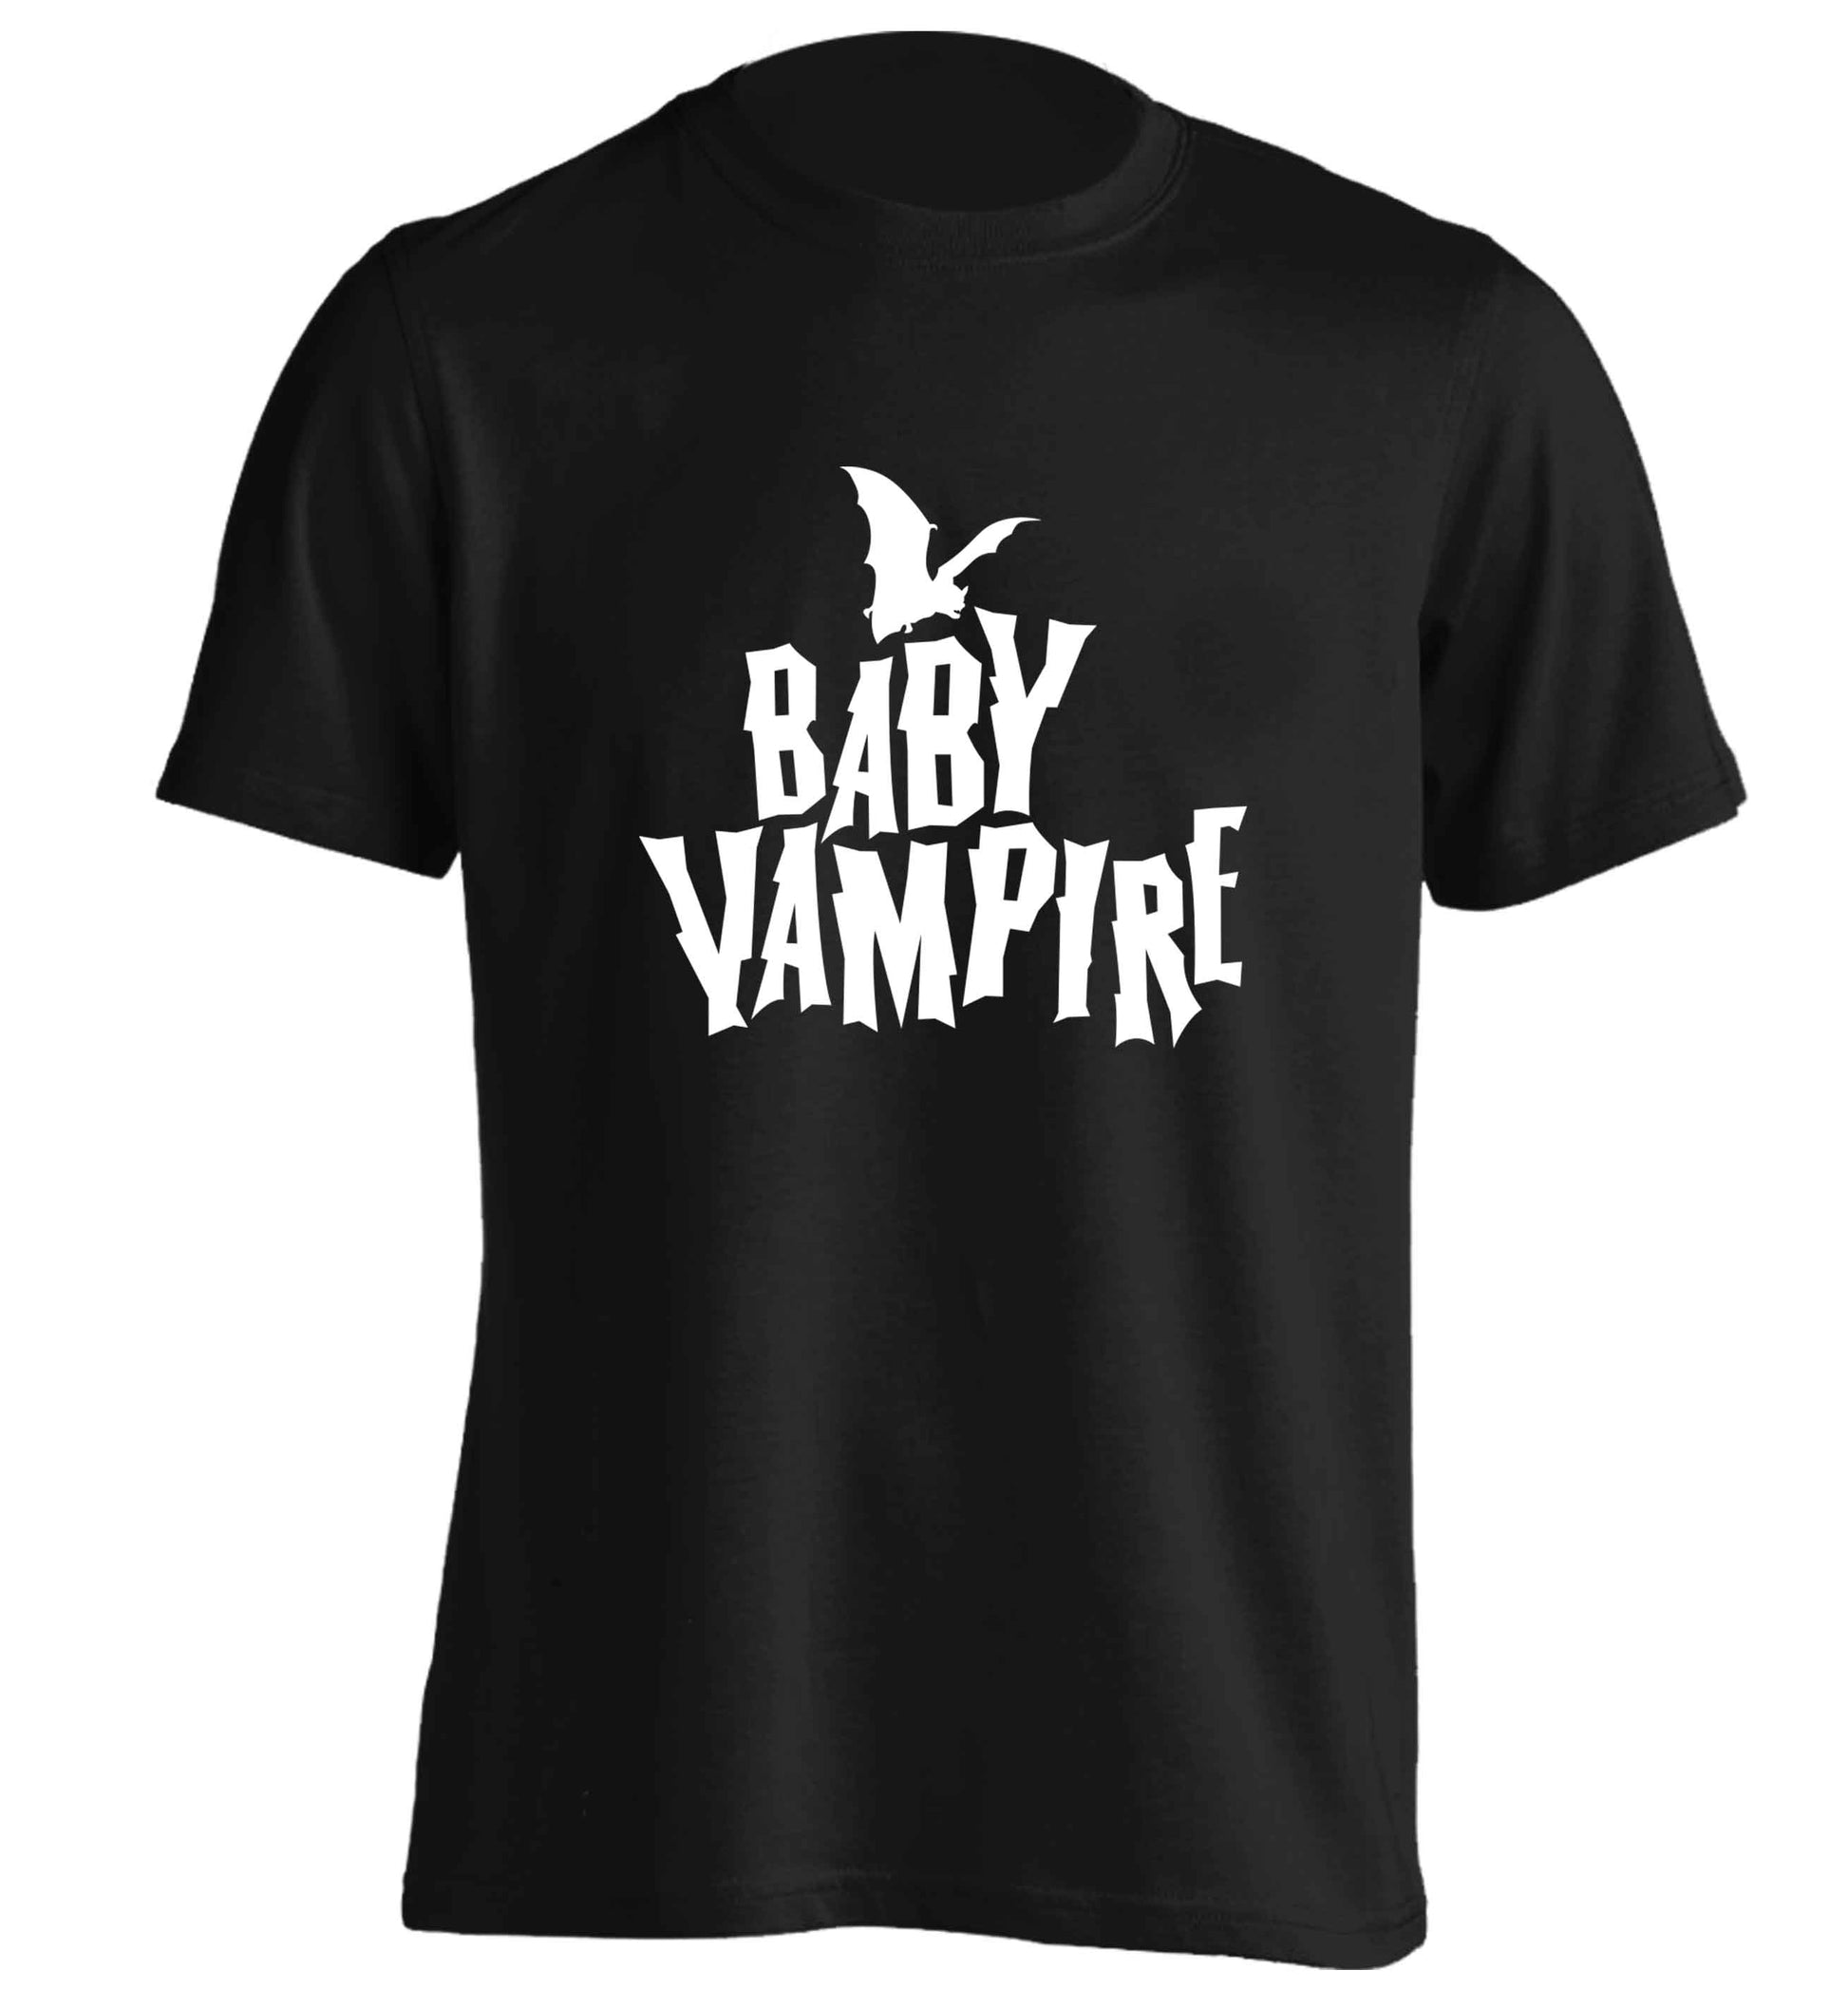 Baby vampire adults unisex black Tshirt 2XL